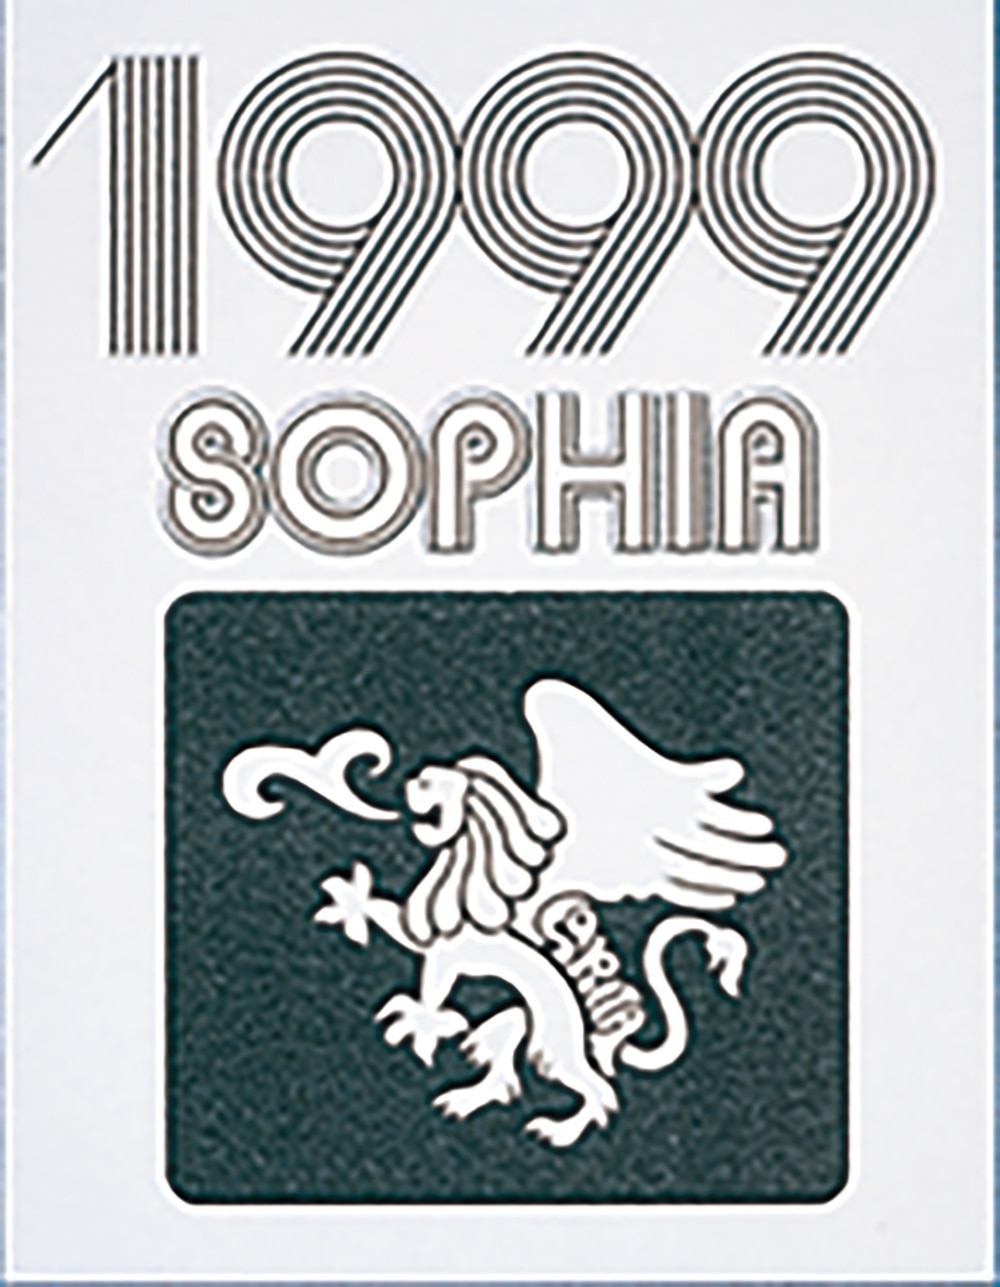 1999 - DISCOGRAPHY | SOPHIA オフィシャルサイト